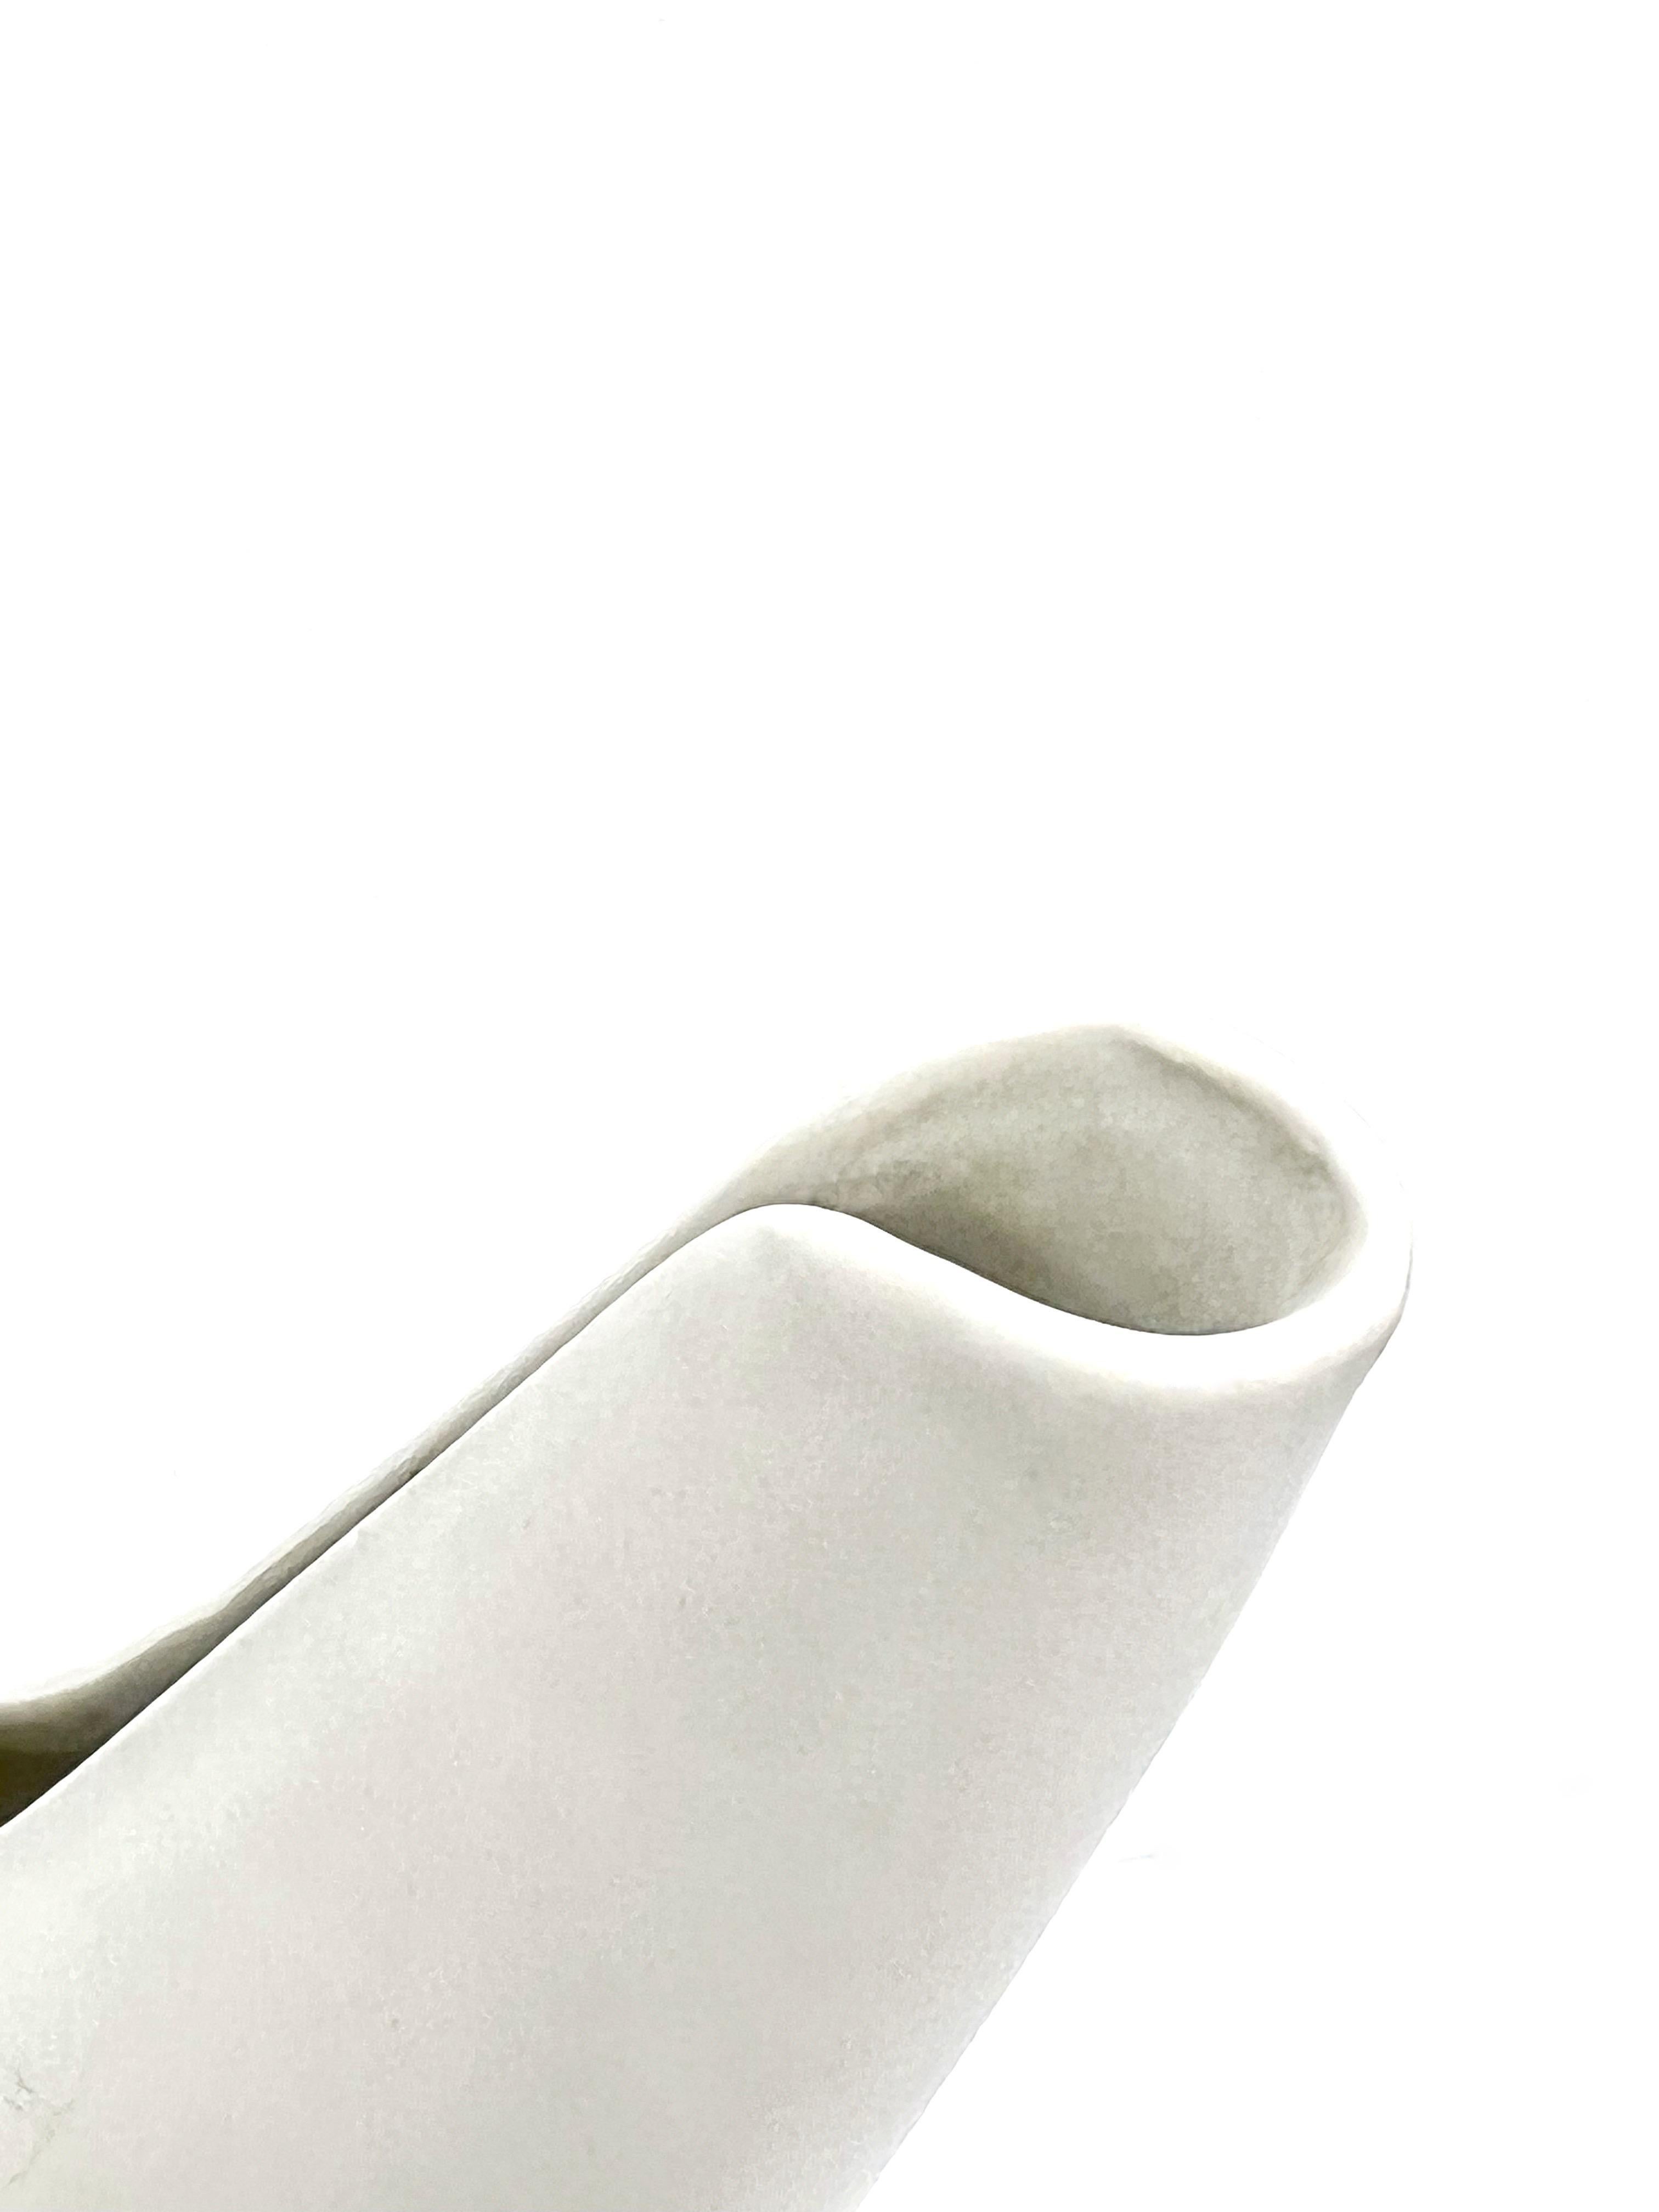 Stig Lindbergh Gustavsberg Abstract Matte White Veckla Vase For Sale 4